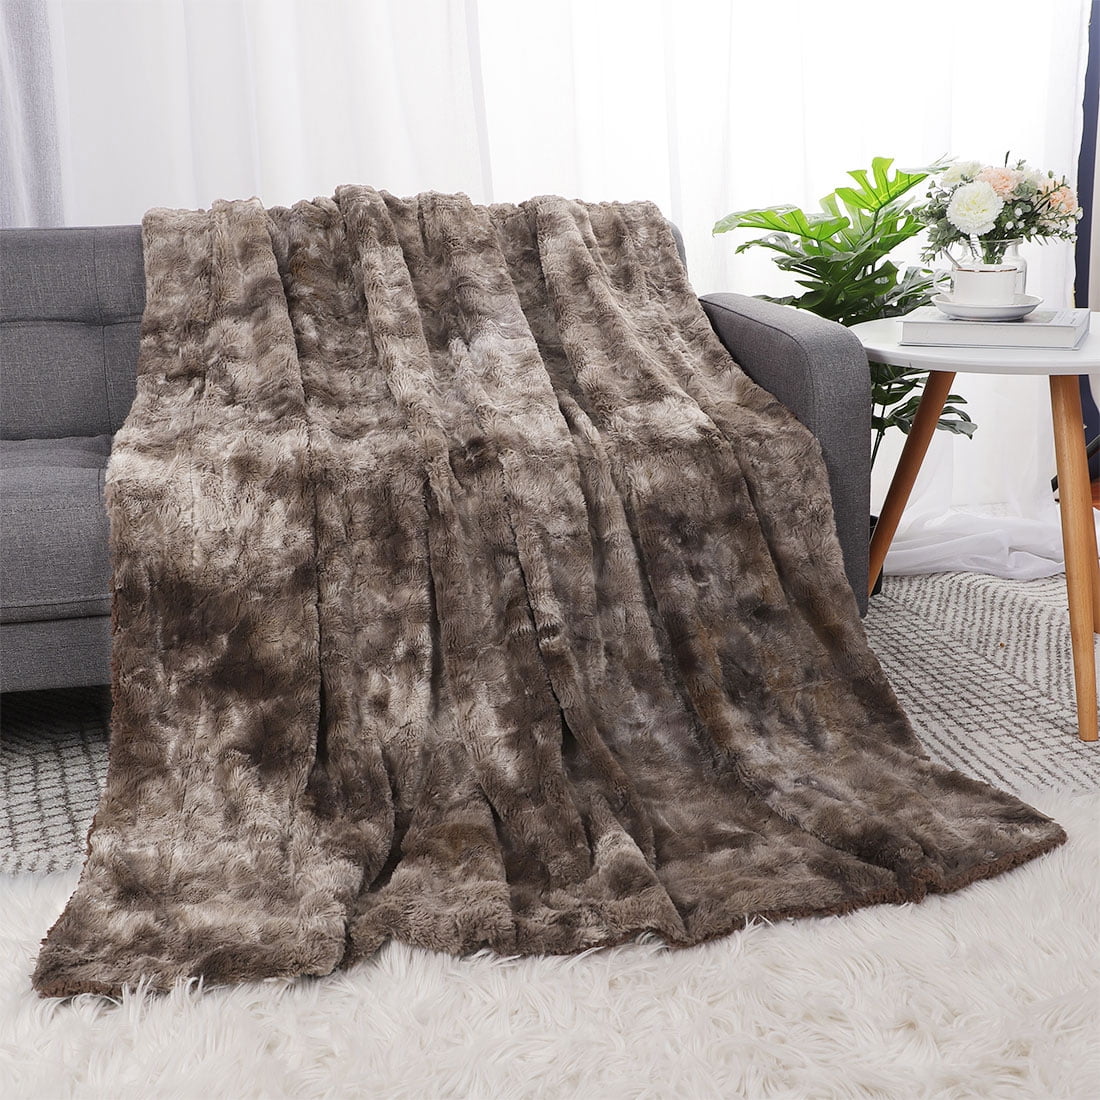 Super Luxury Fur Mink Animal Print Throws Super Soft Sofa bed Blanket All Sizes 